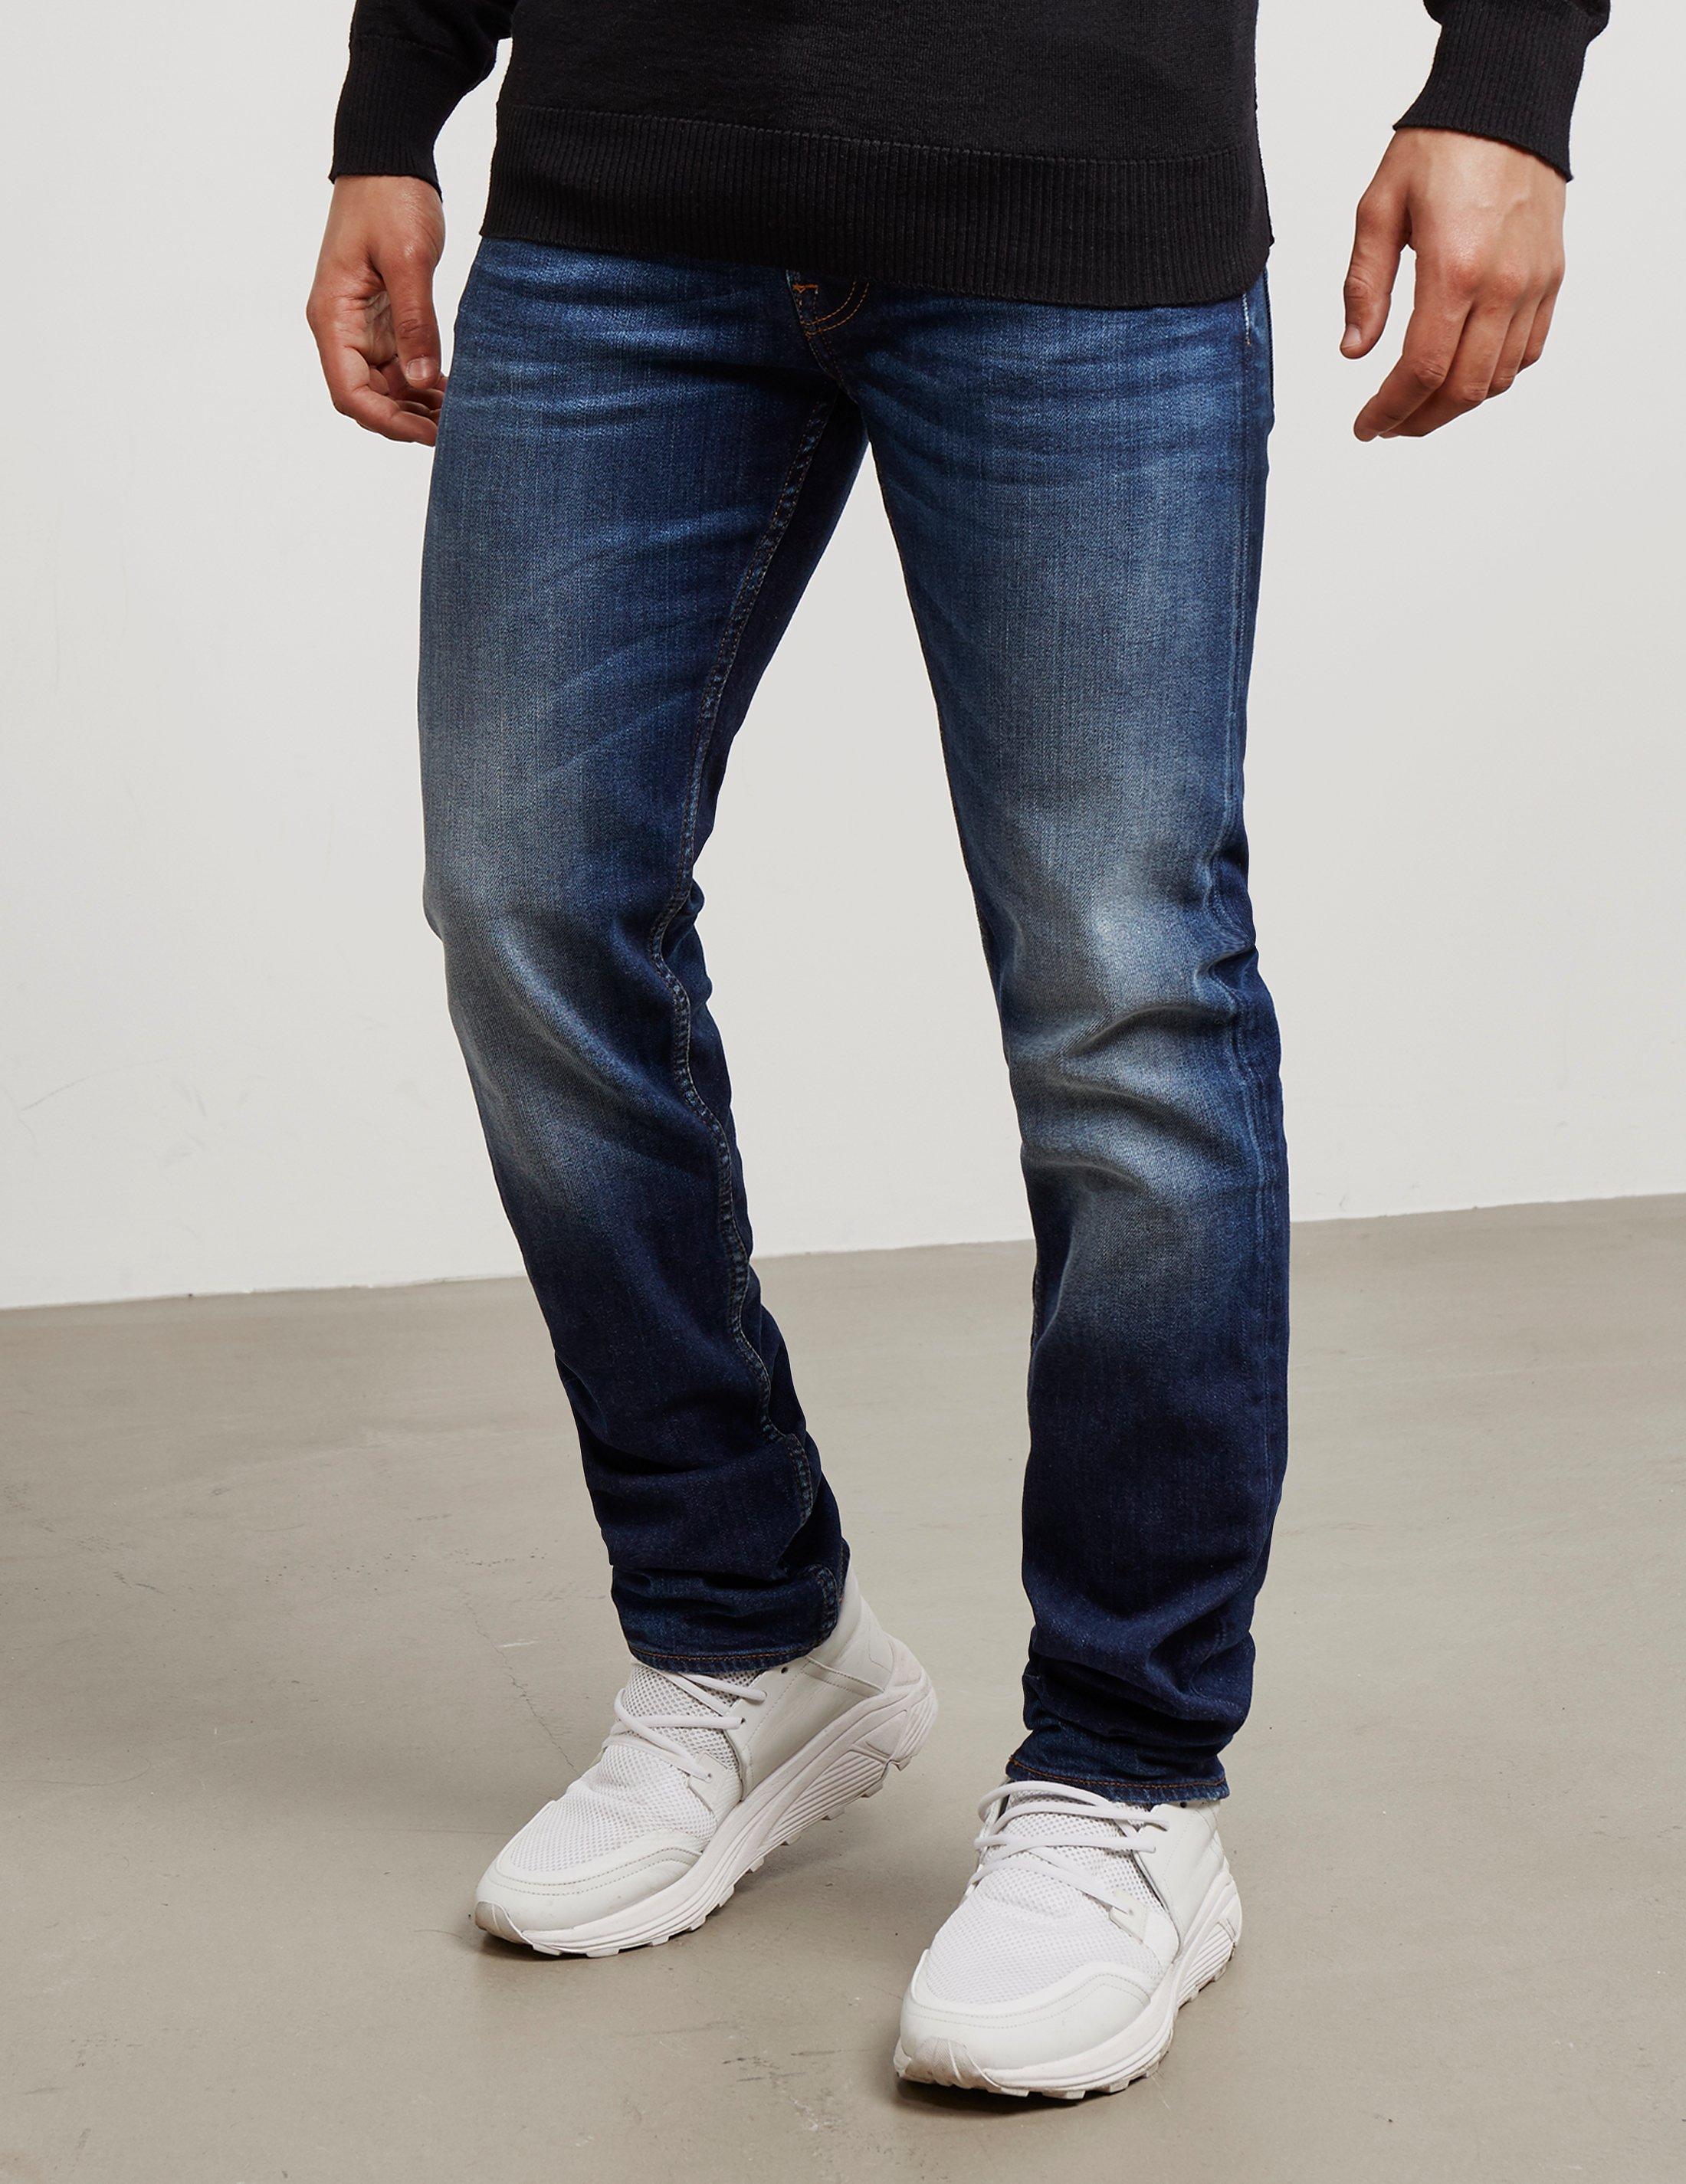 Stone Island Denim Slim Jeans Blue for Men - Lyst